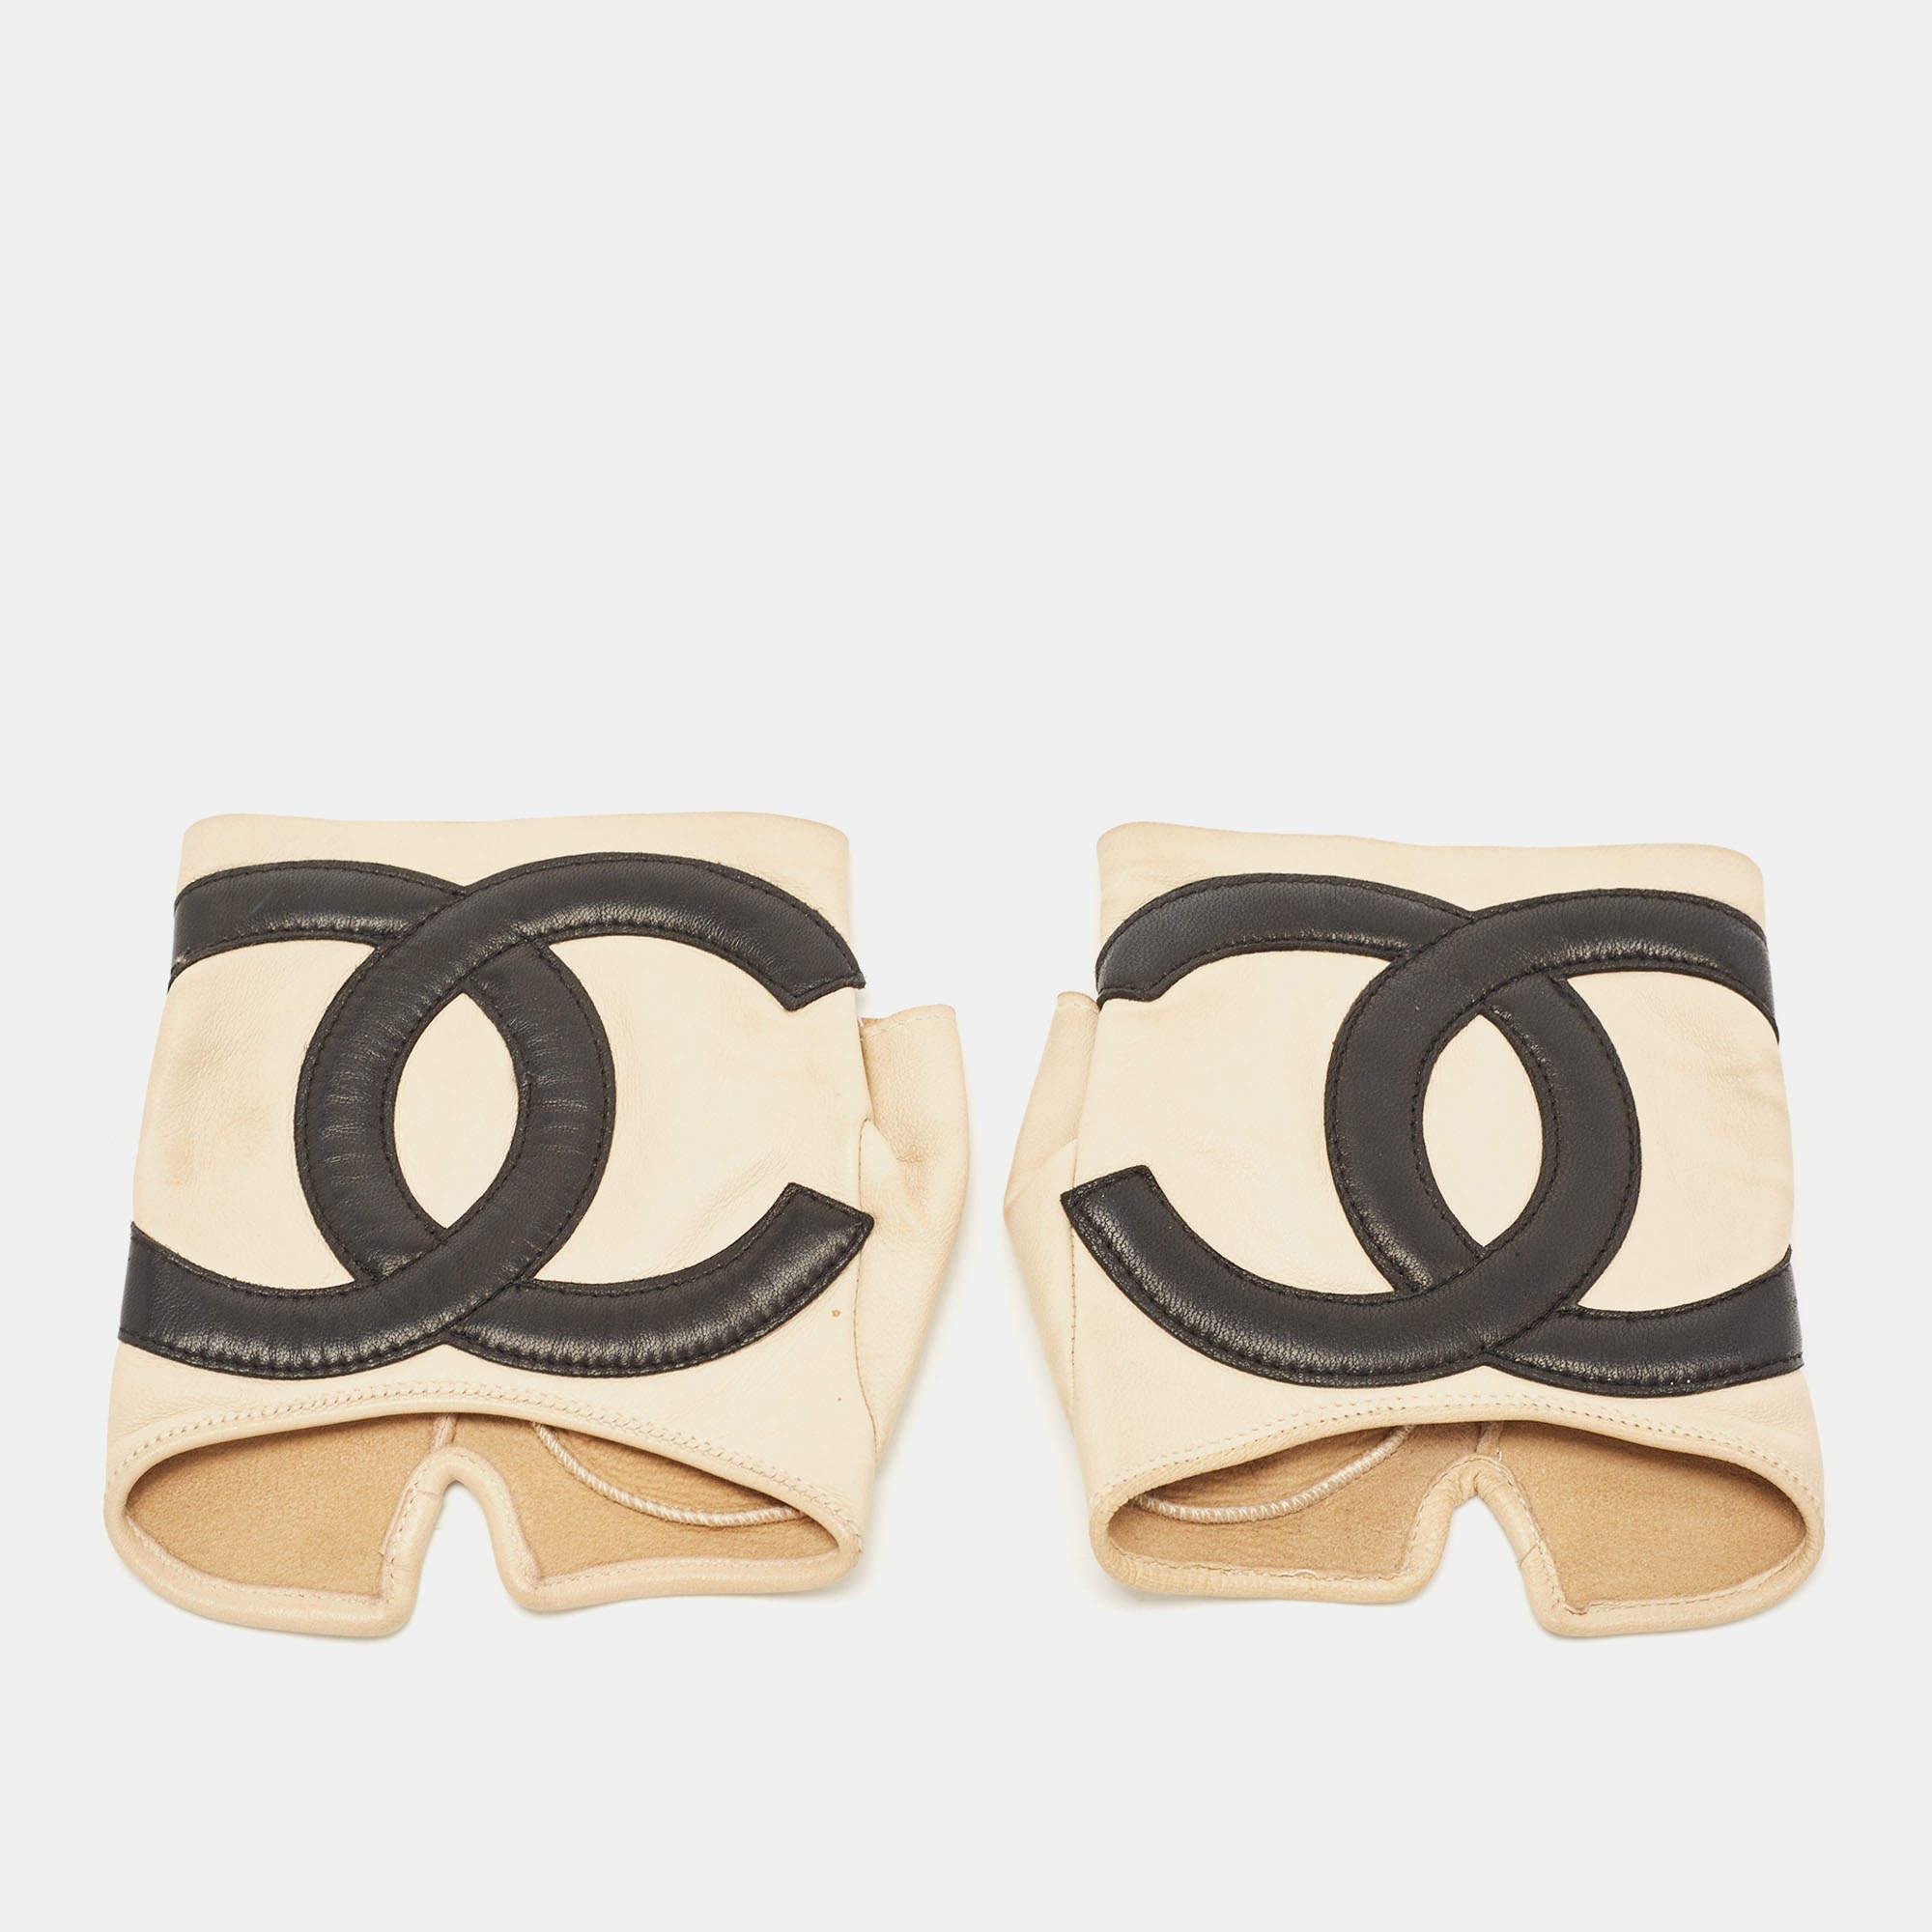 Chanel Beige/Black Leather CC Fingerless Gloves Size 8 Chanel